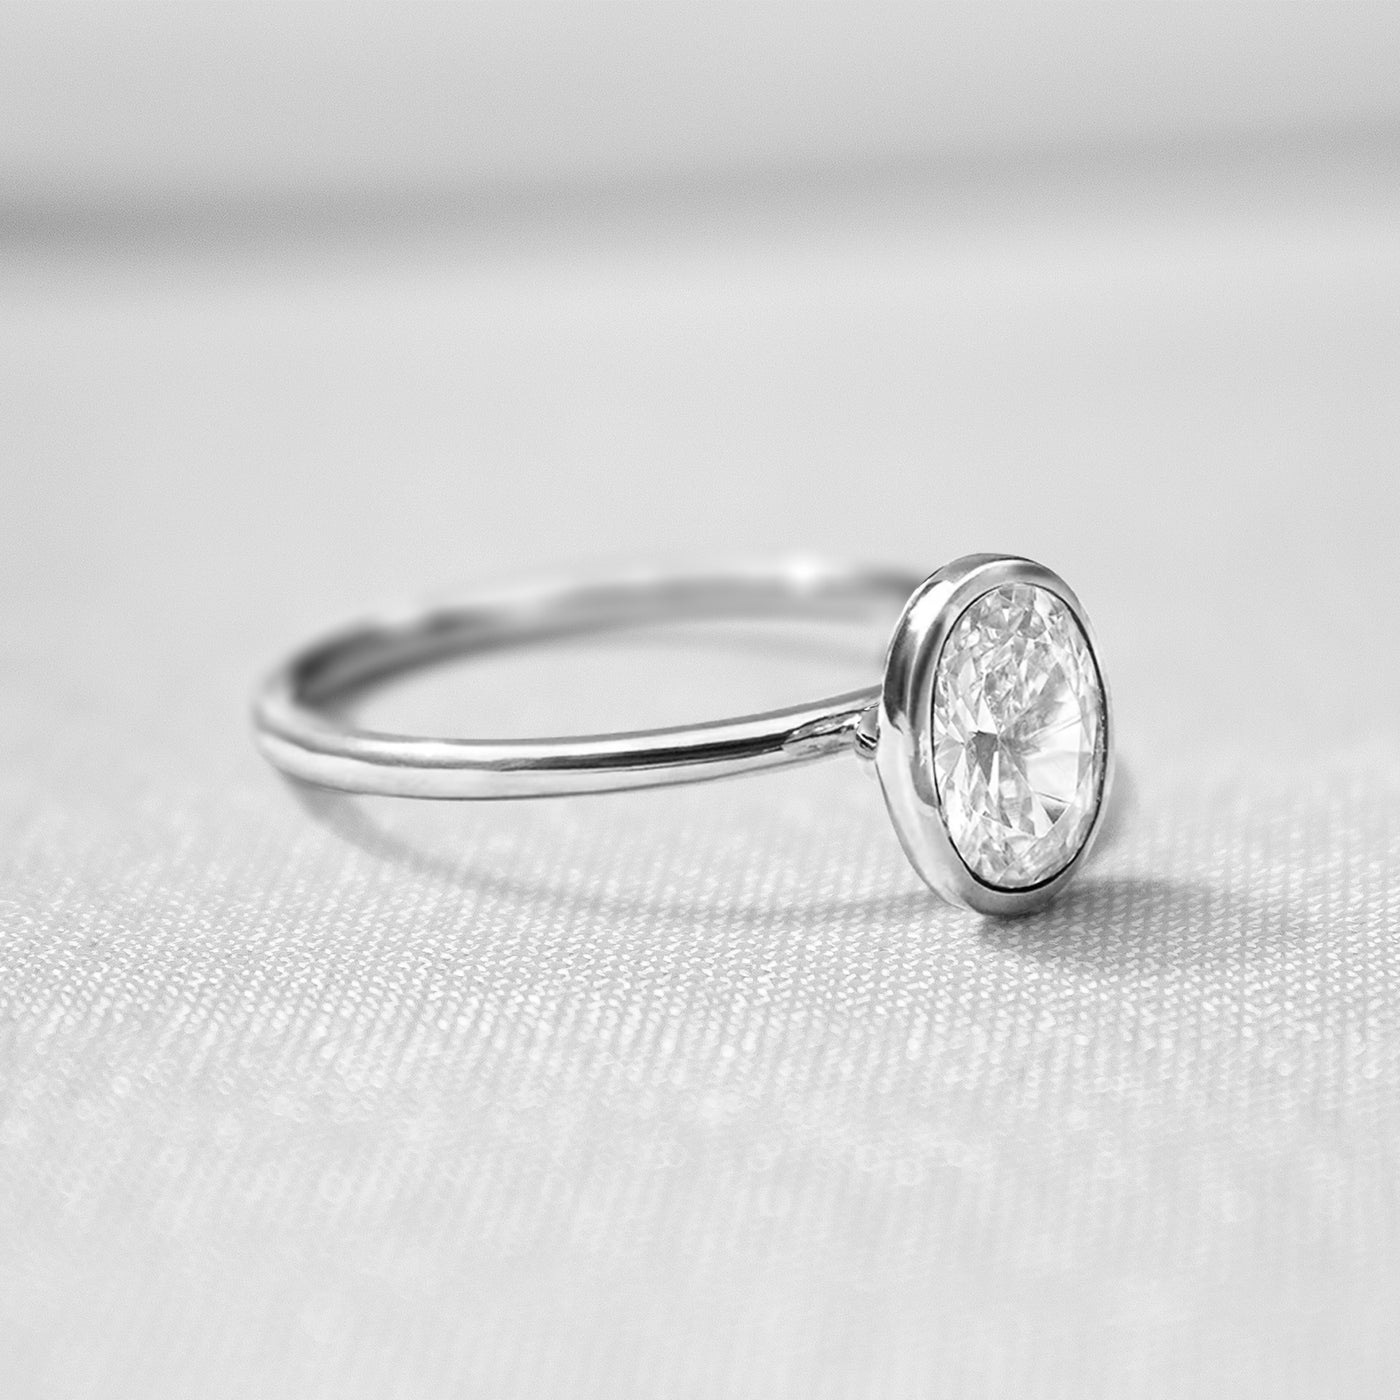 Shown in 1.0 carat " The Nova Bezel Diamond Engagement Ring | Lisa Robin#platinum